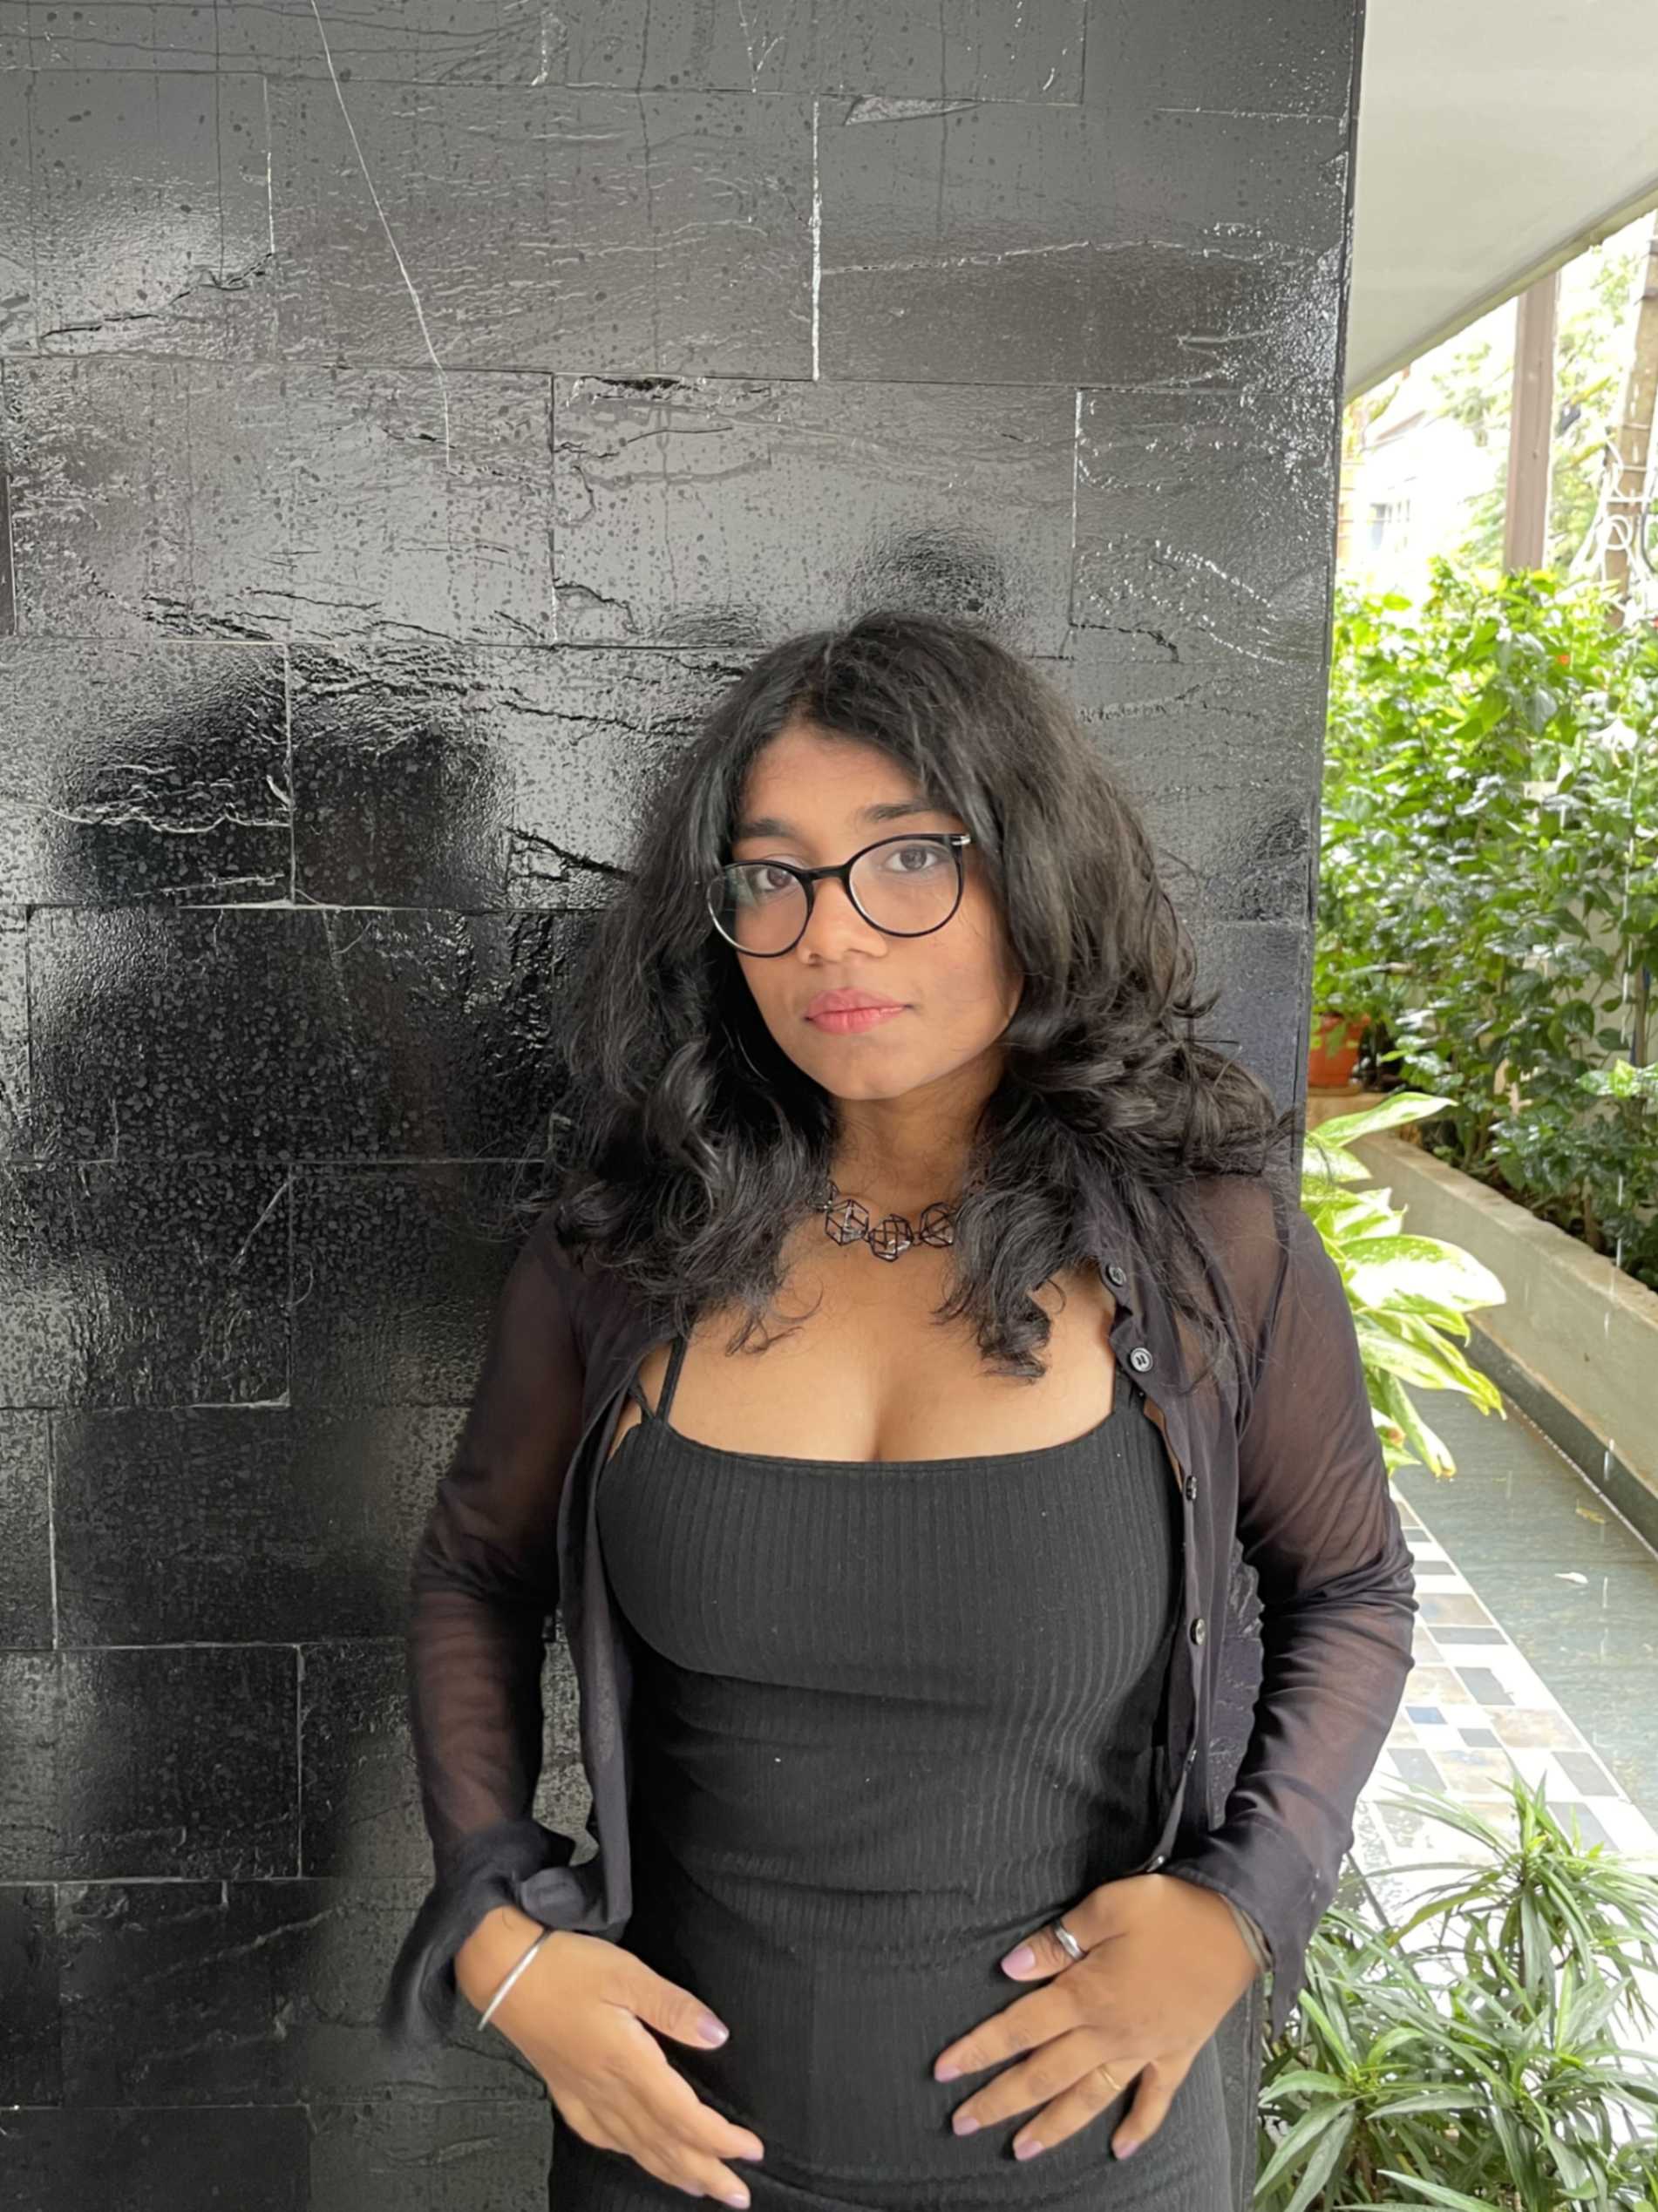 Saumya Gupta